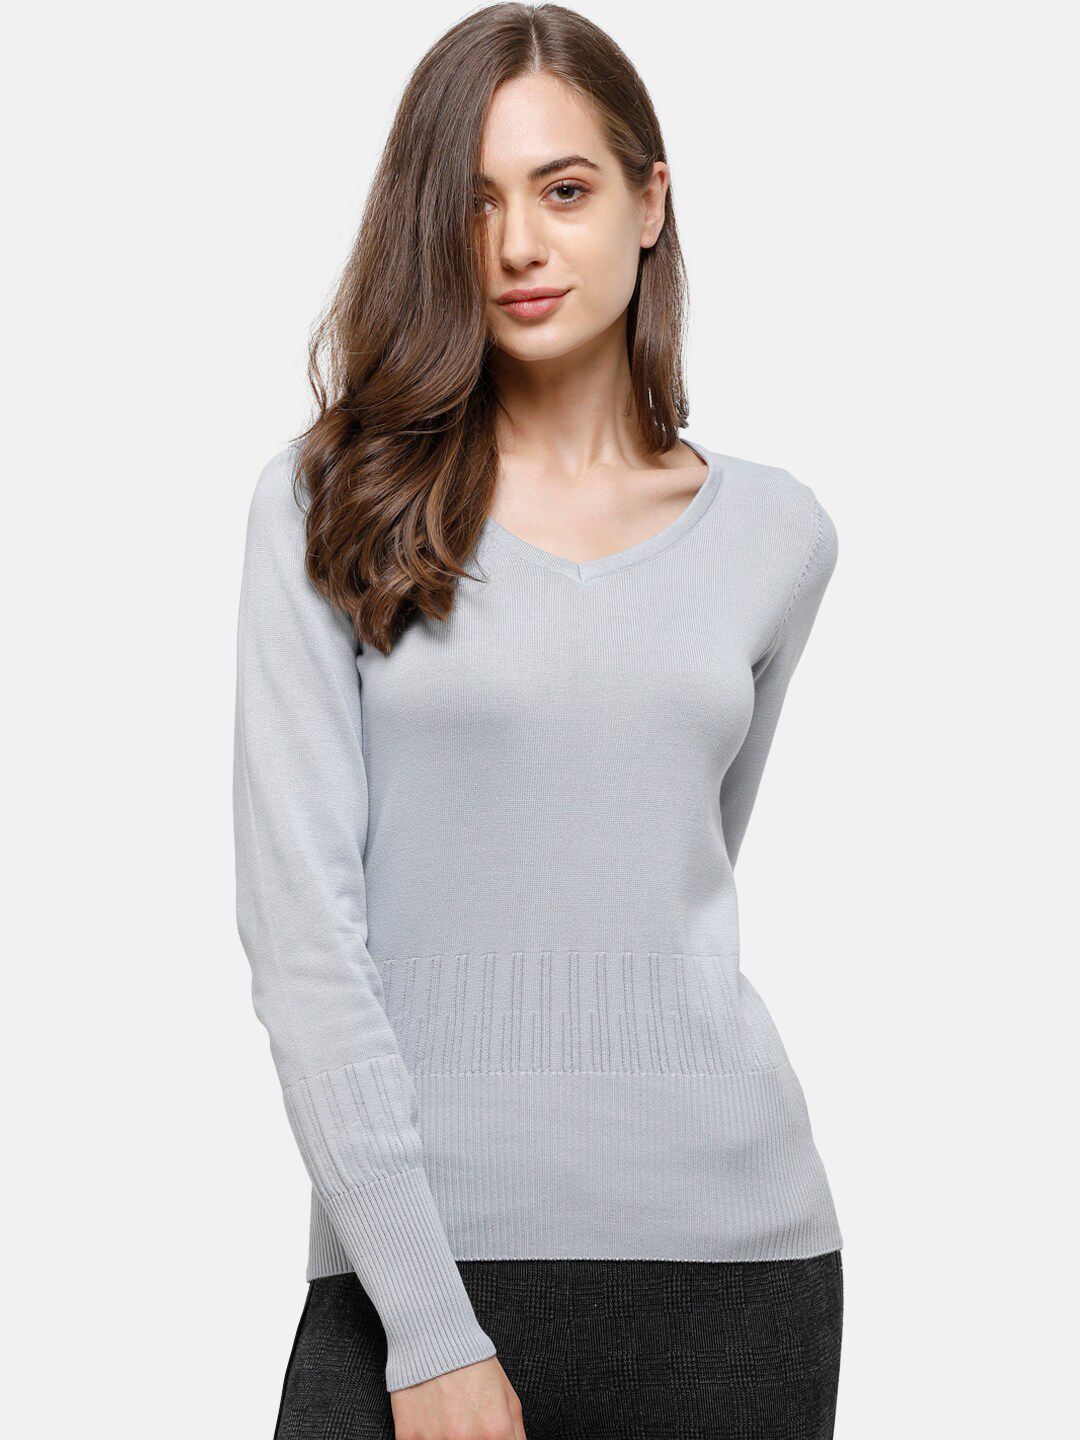 98 Degree North Women Grey Striped Sweater Vest Price in India